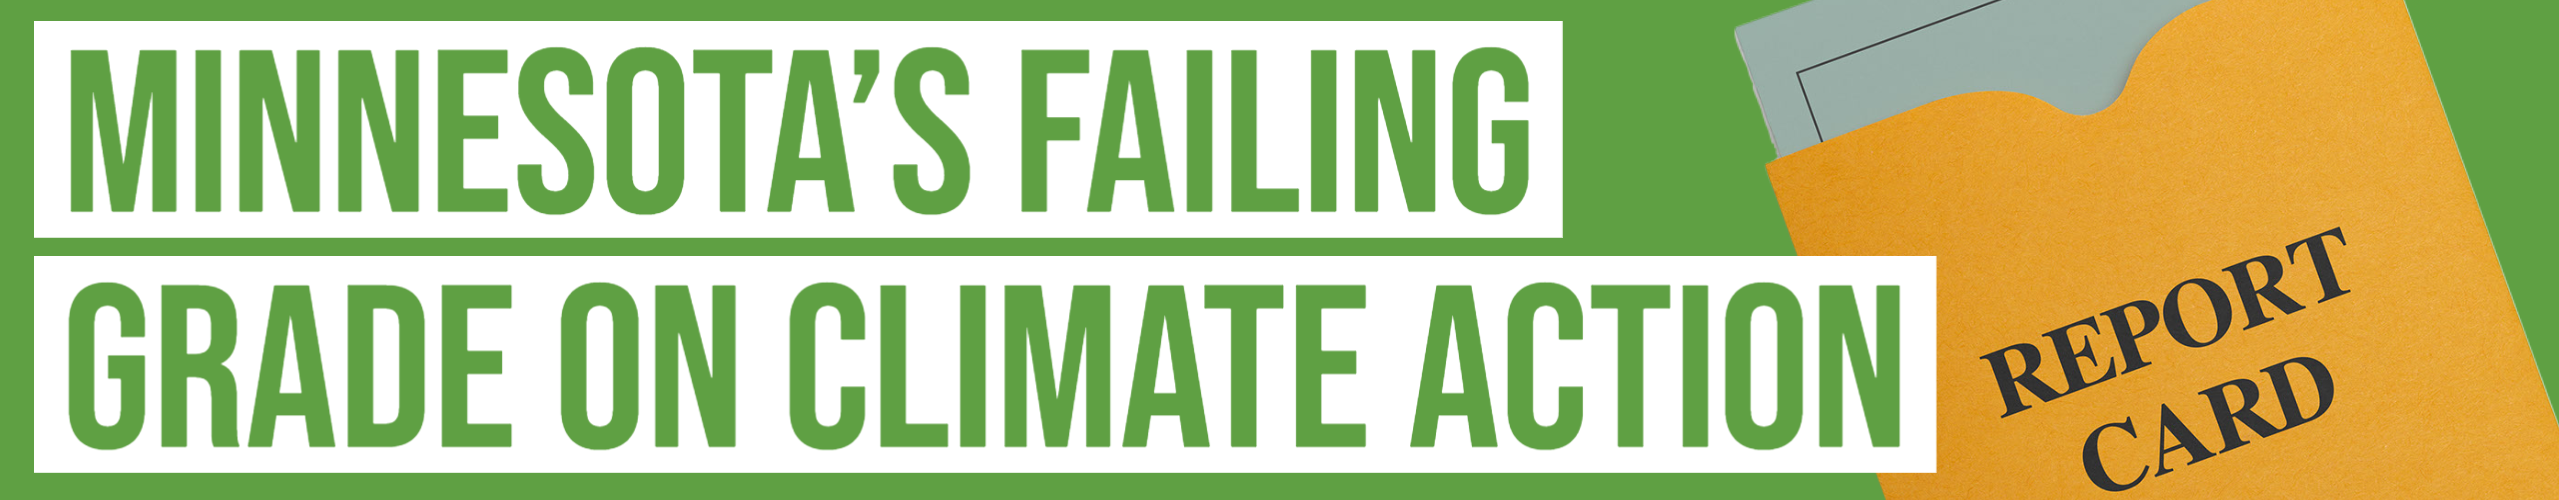 Minnesota's failing grade on climate action